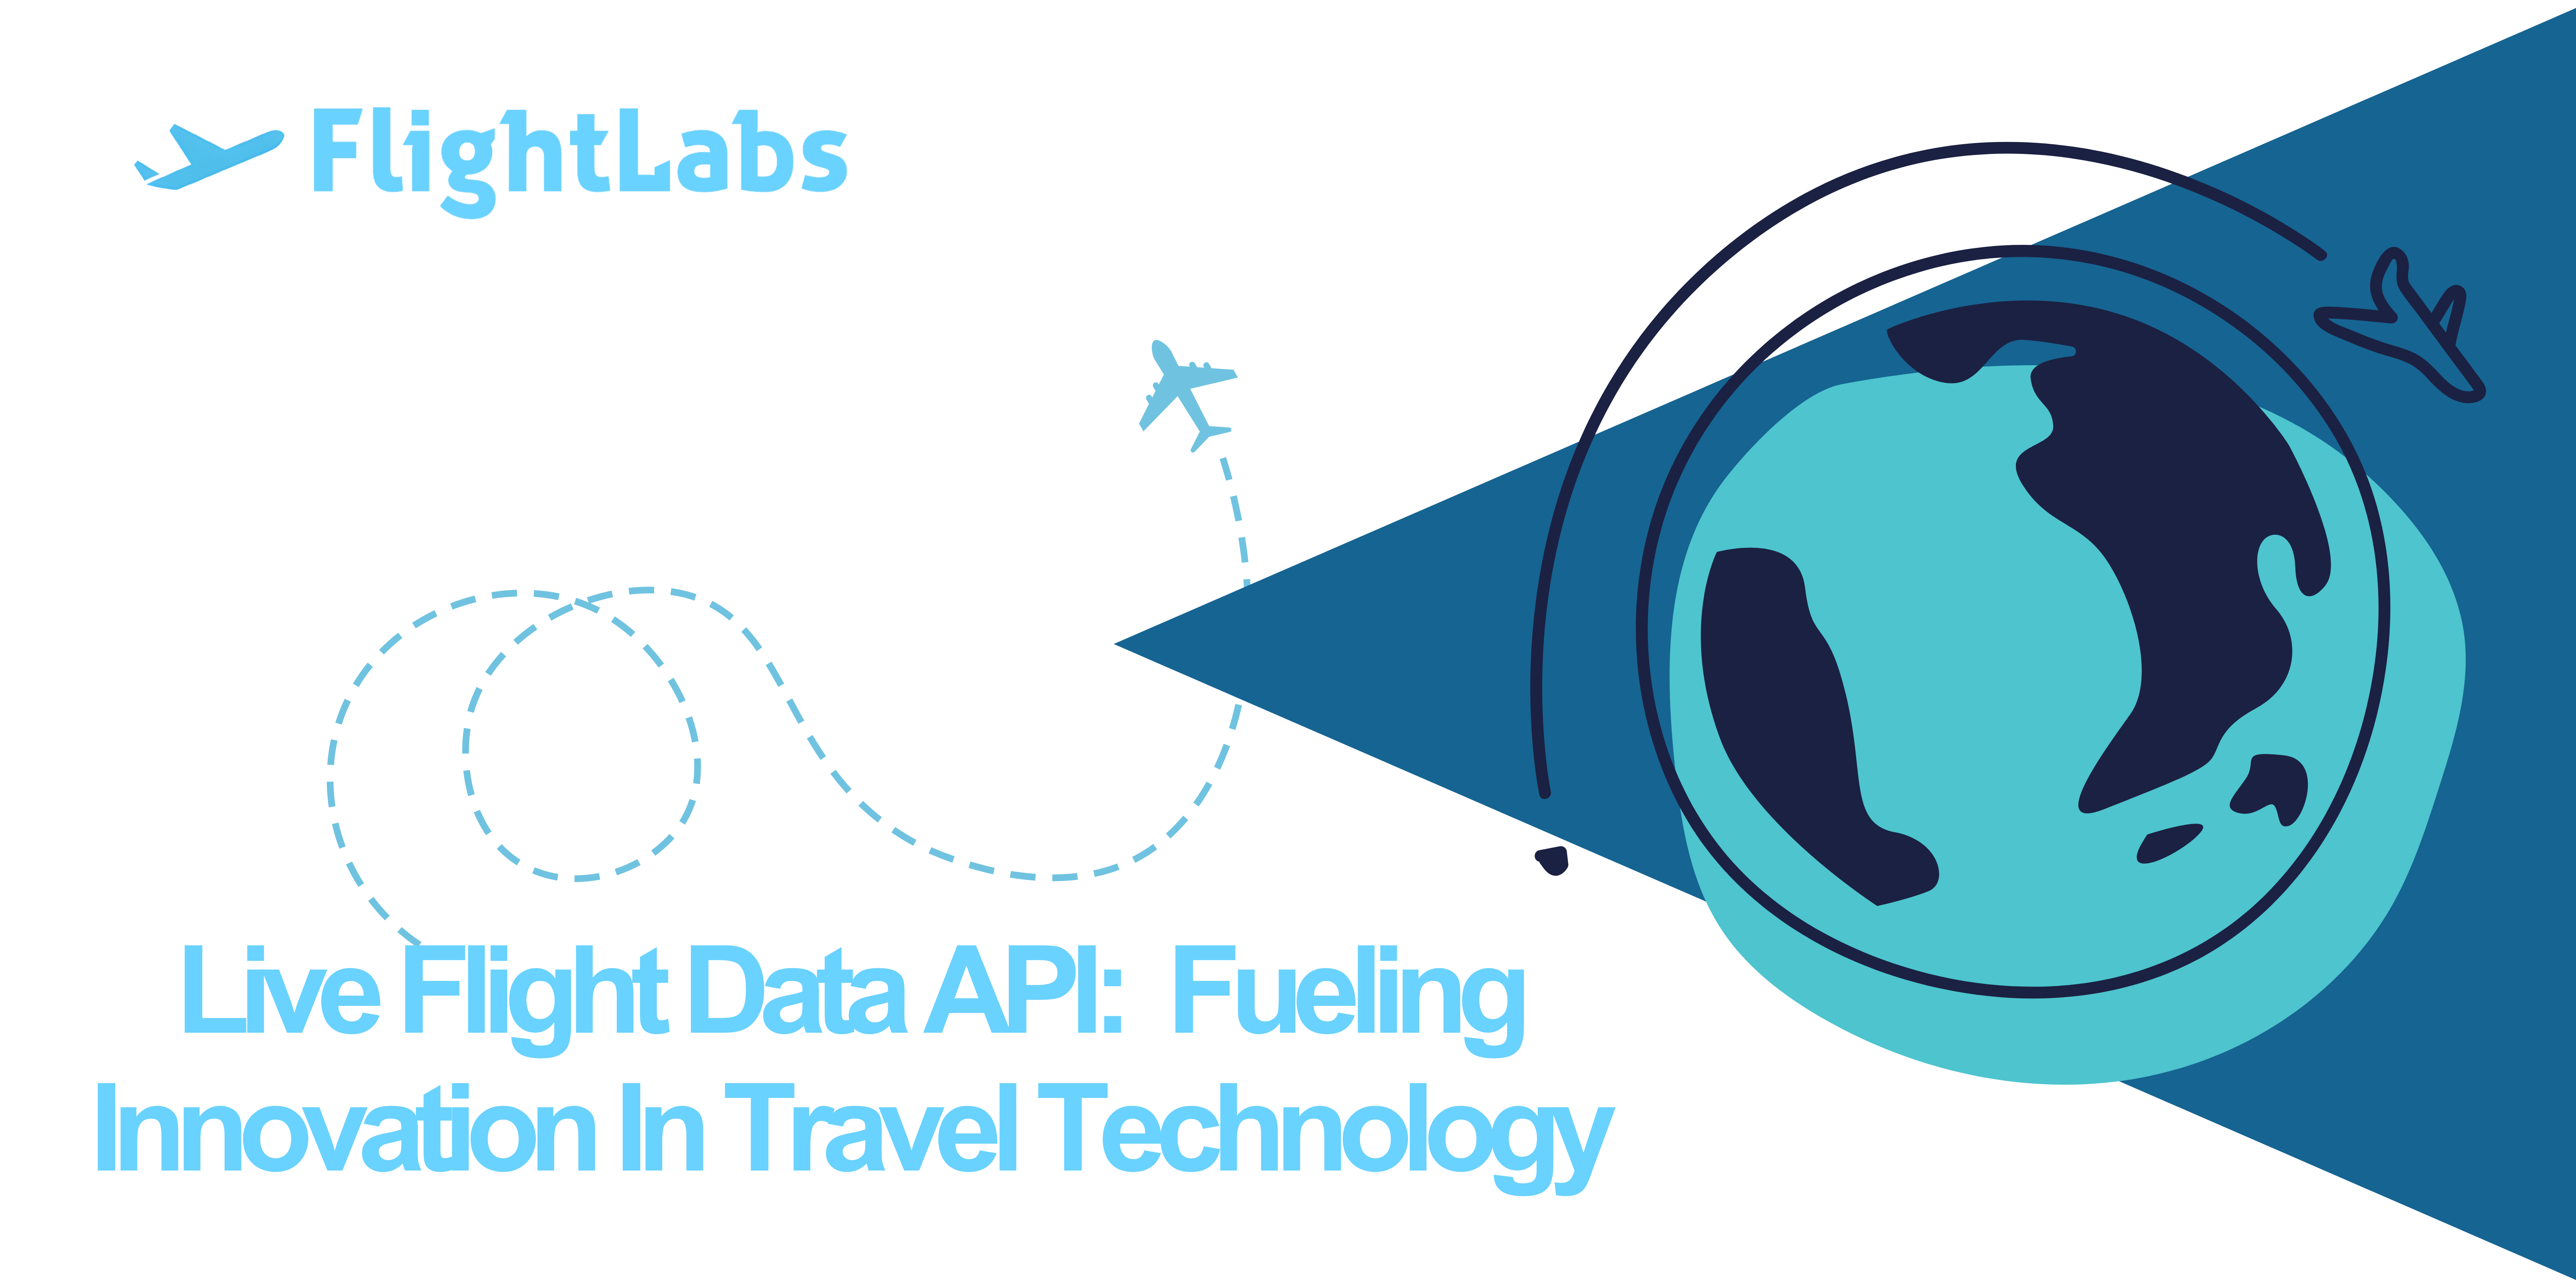 Live Flight Data API: Fueling Innovation In Travel Technology